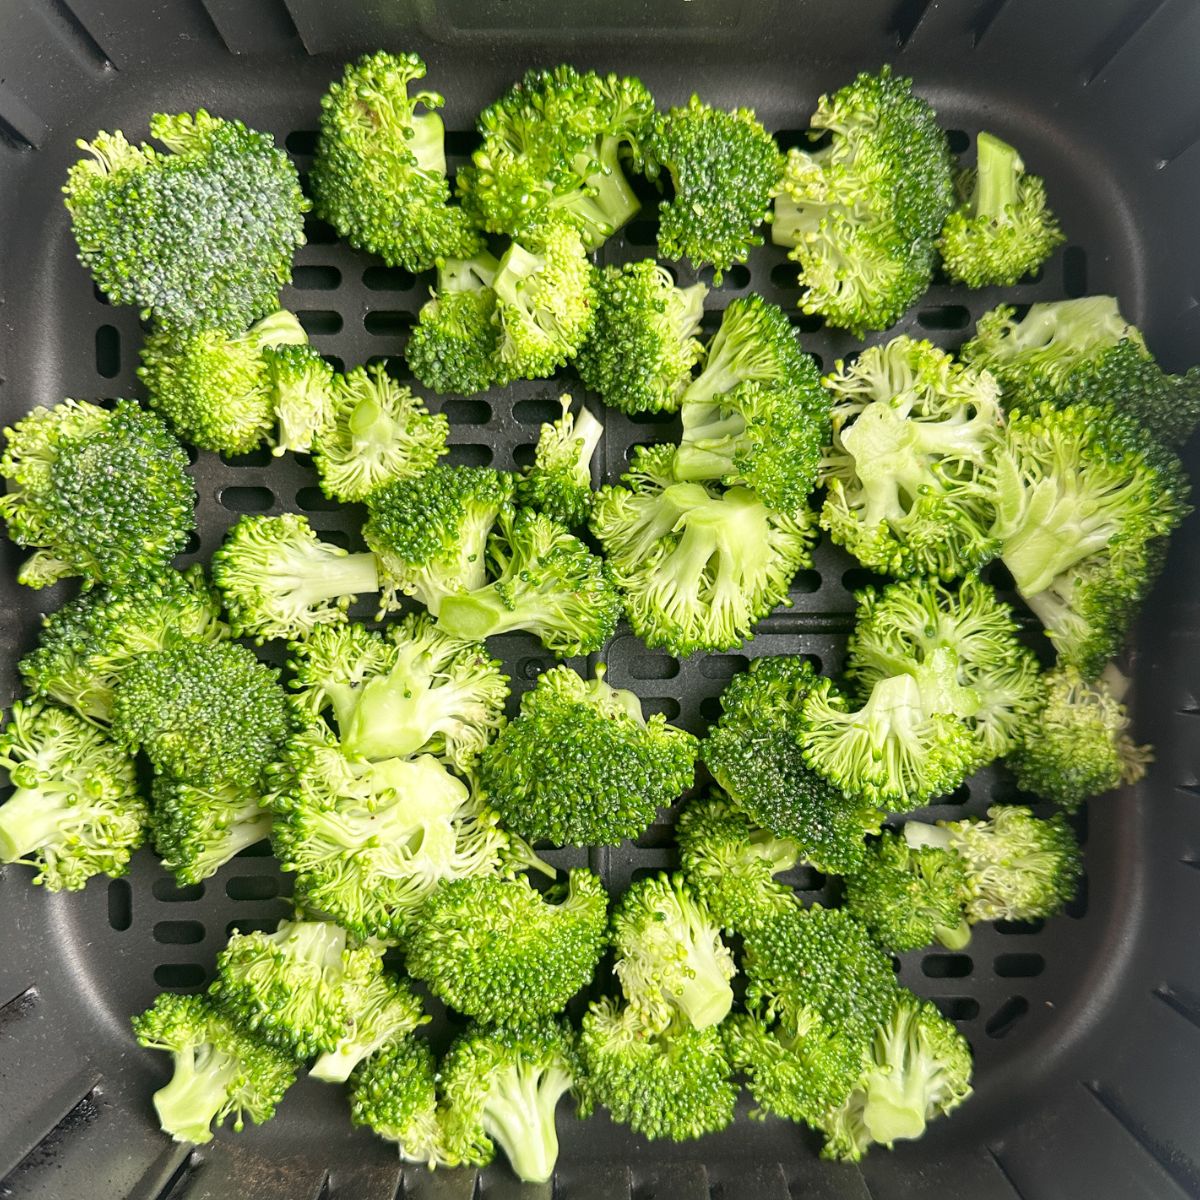 Broccoli florets in an air fryer basket. 